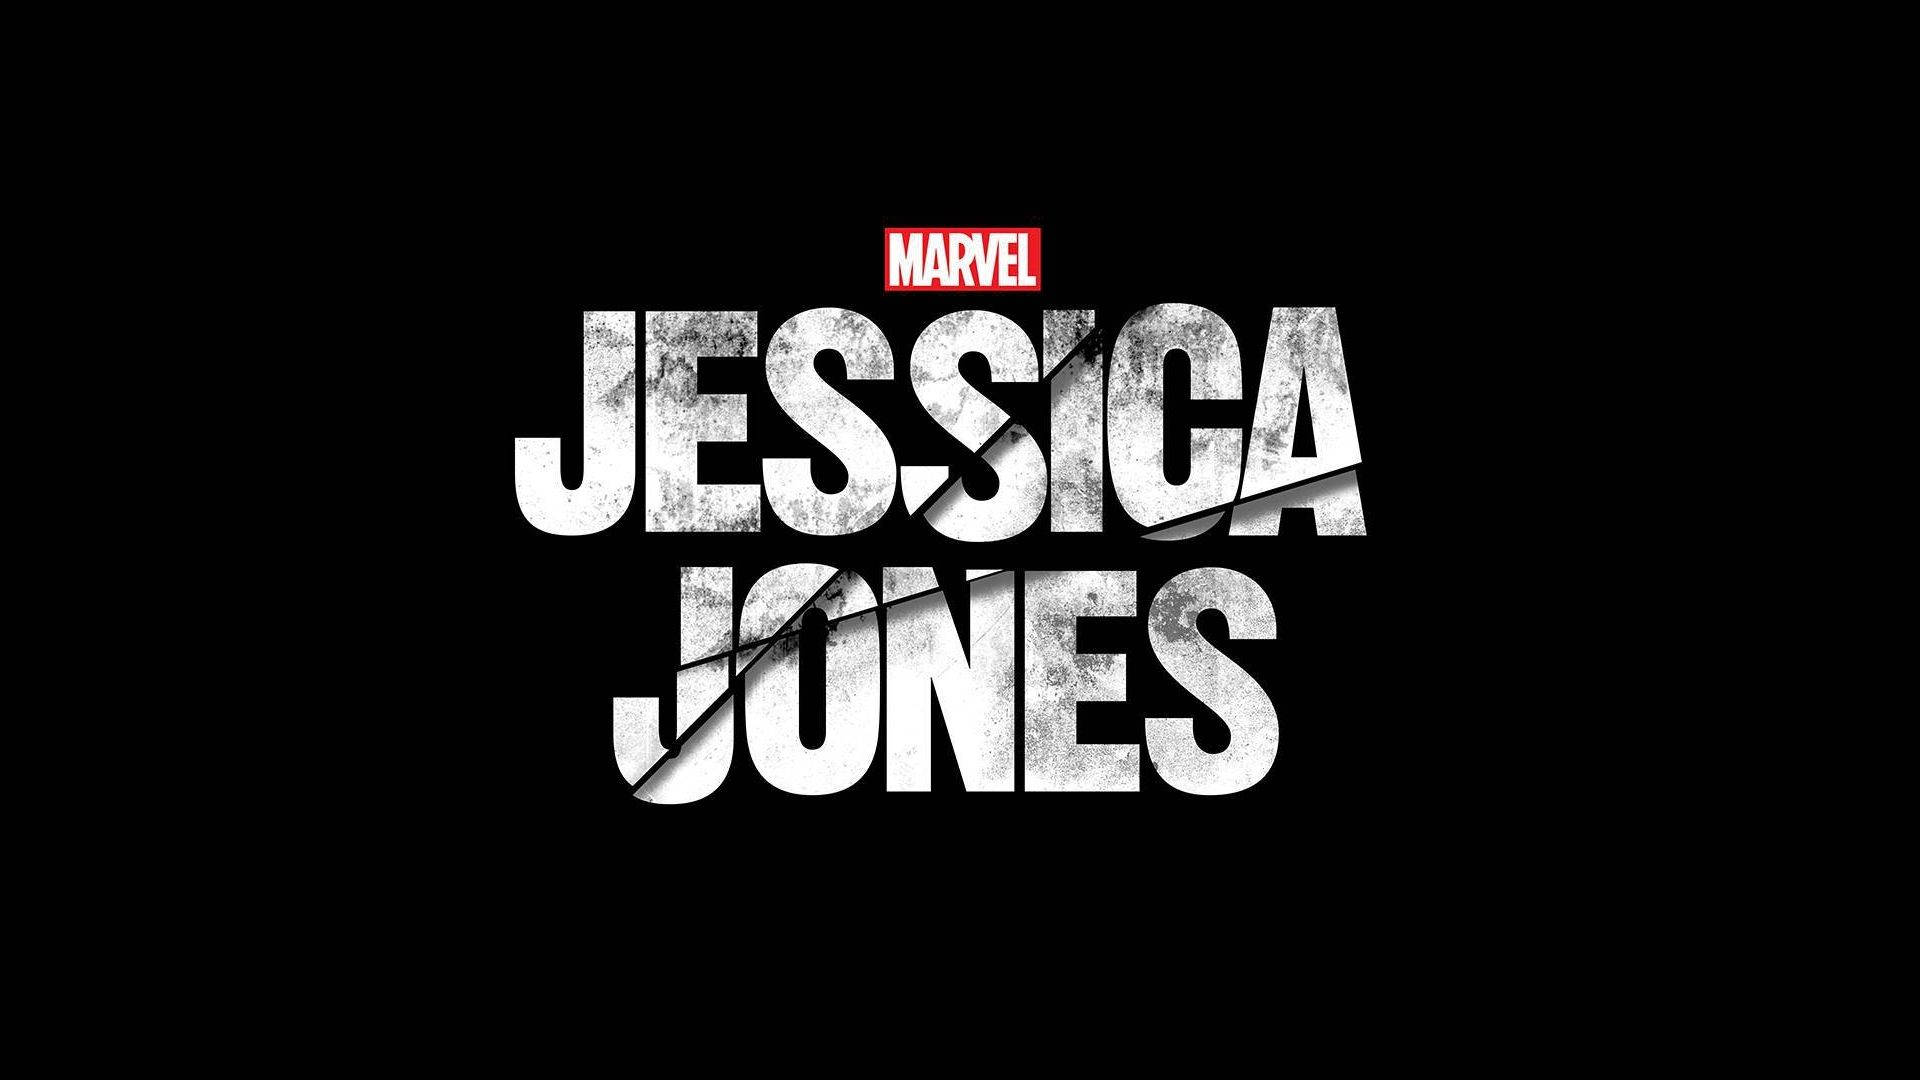 Marvel Jessica Jones Poster Wallpaper